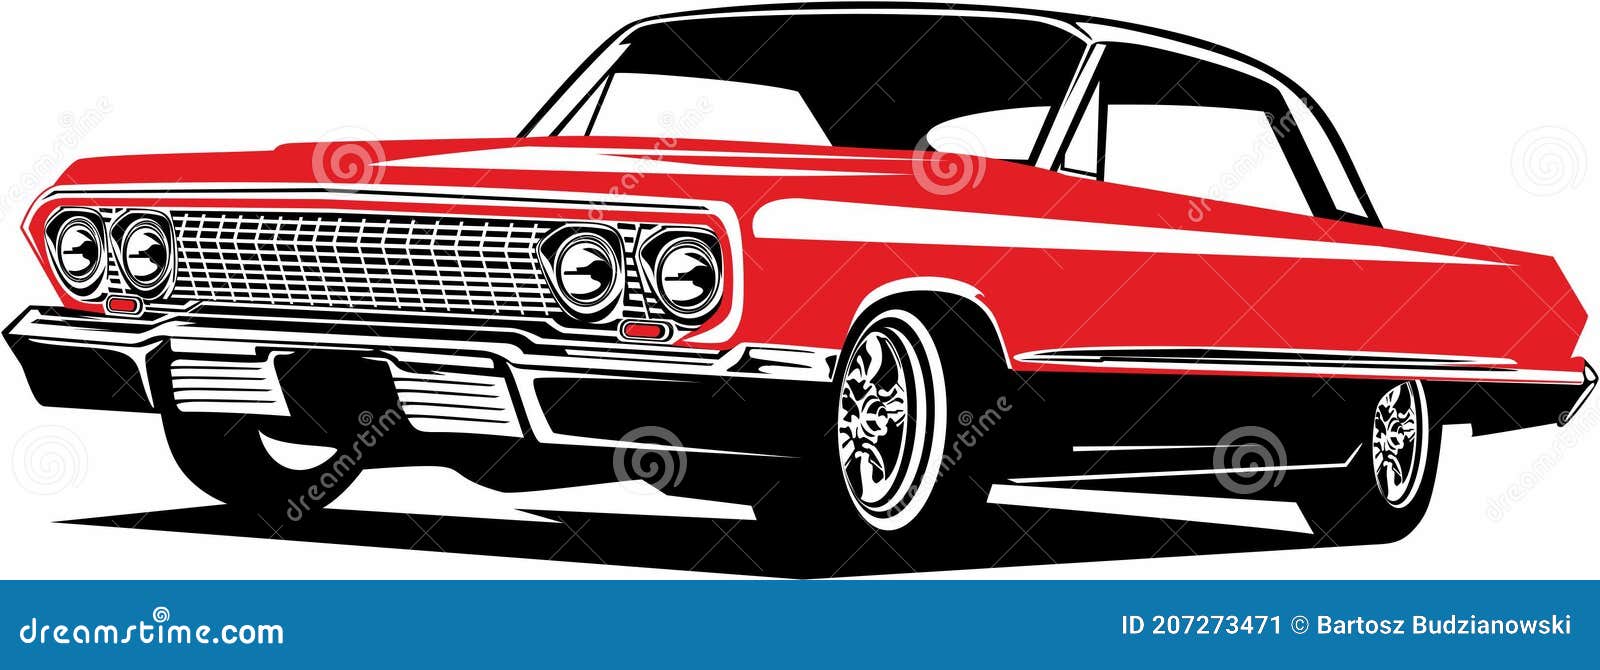 classic vintage retro legendary american muscle car chevrolet impala